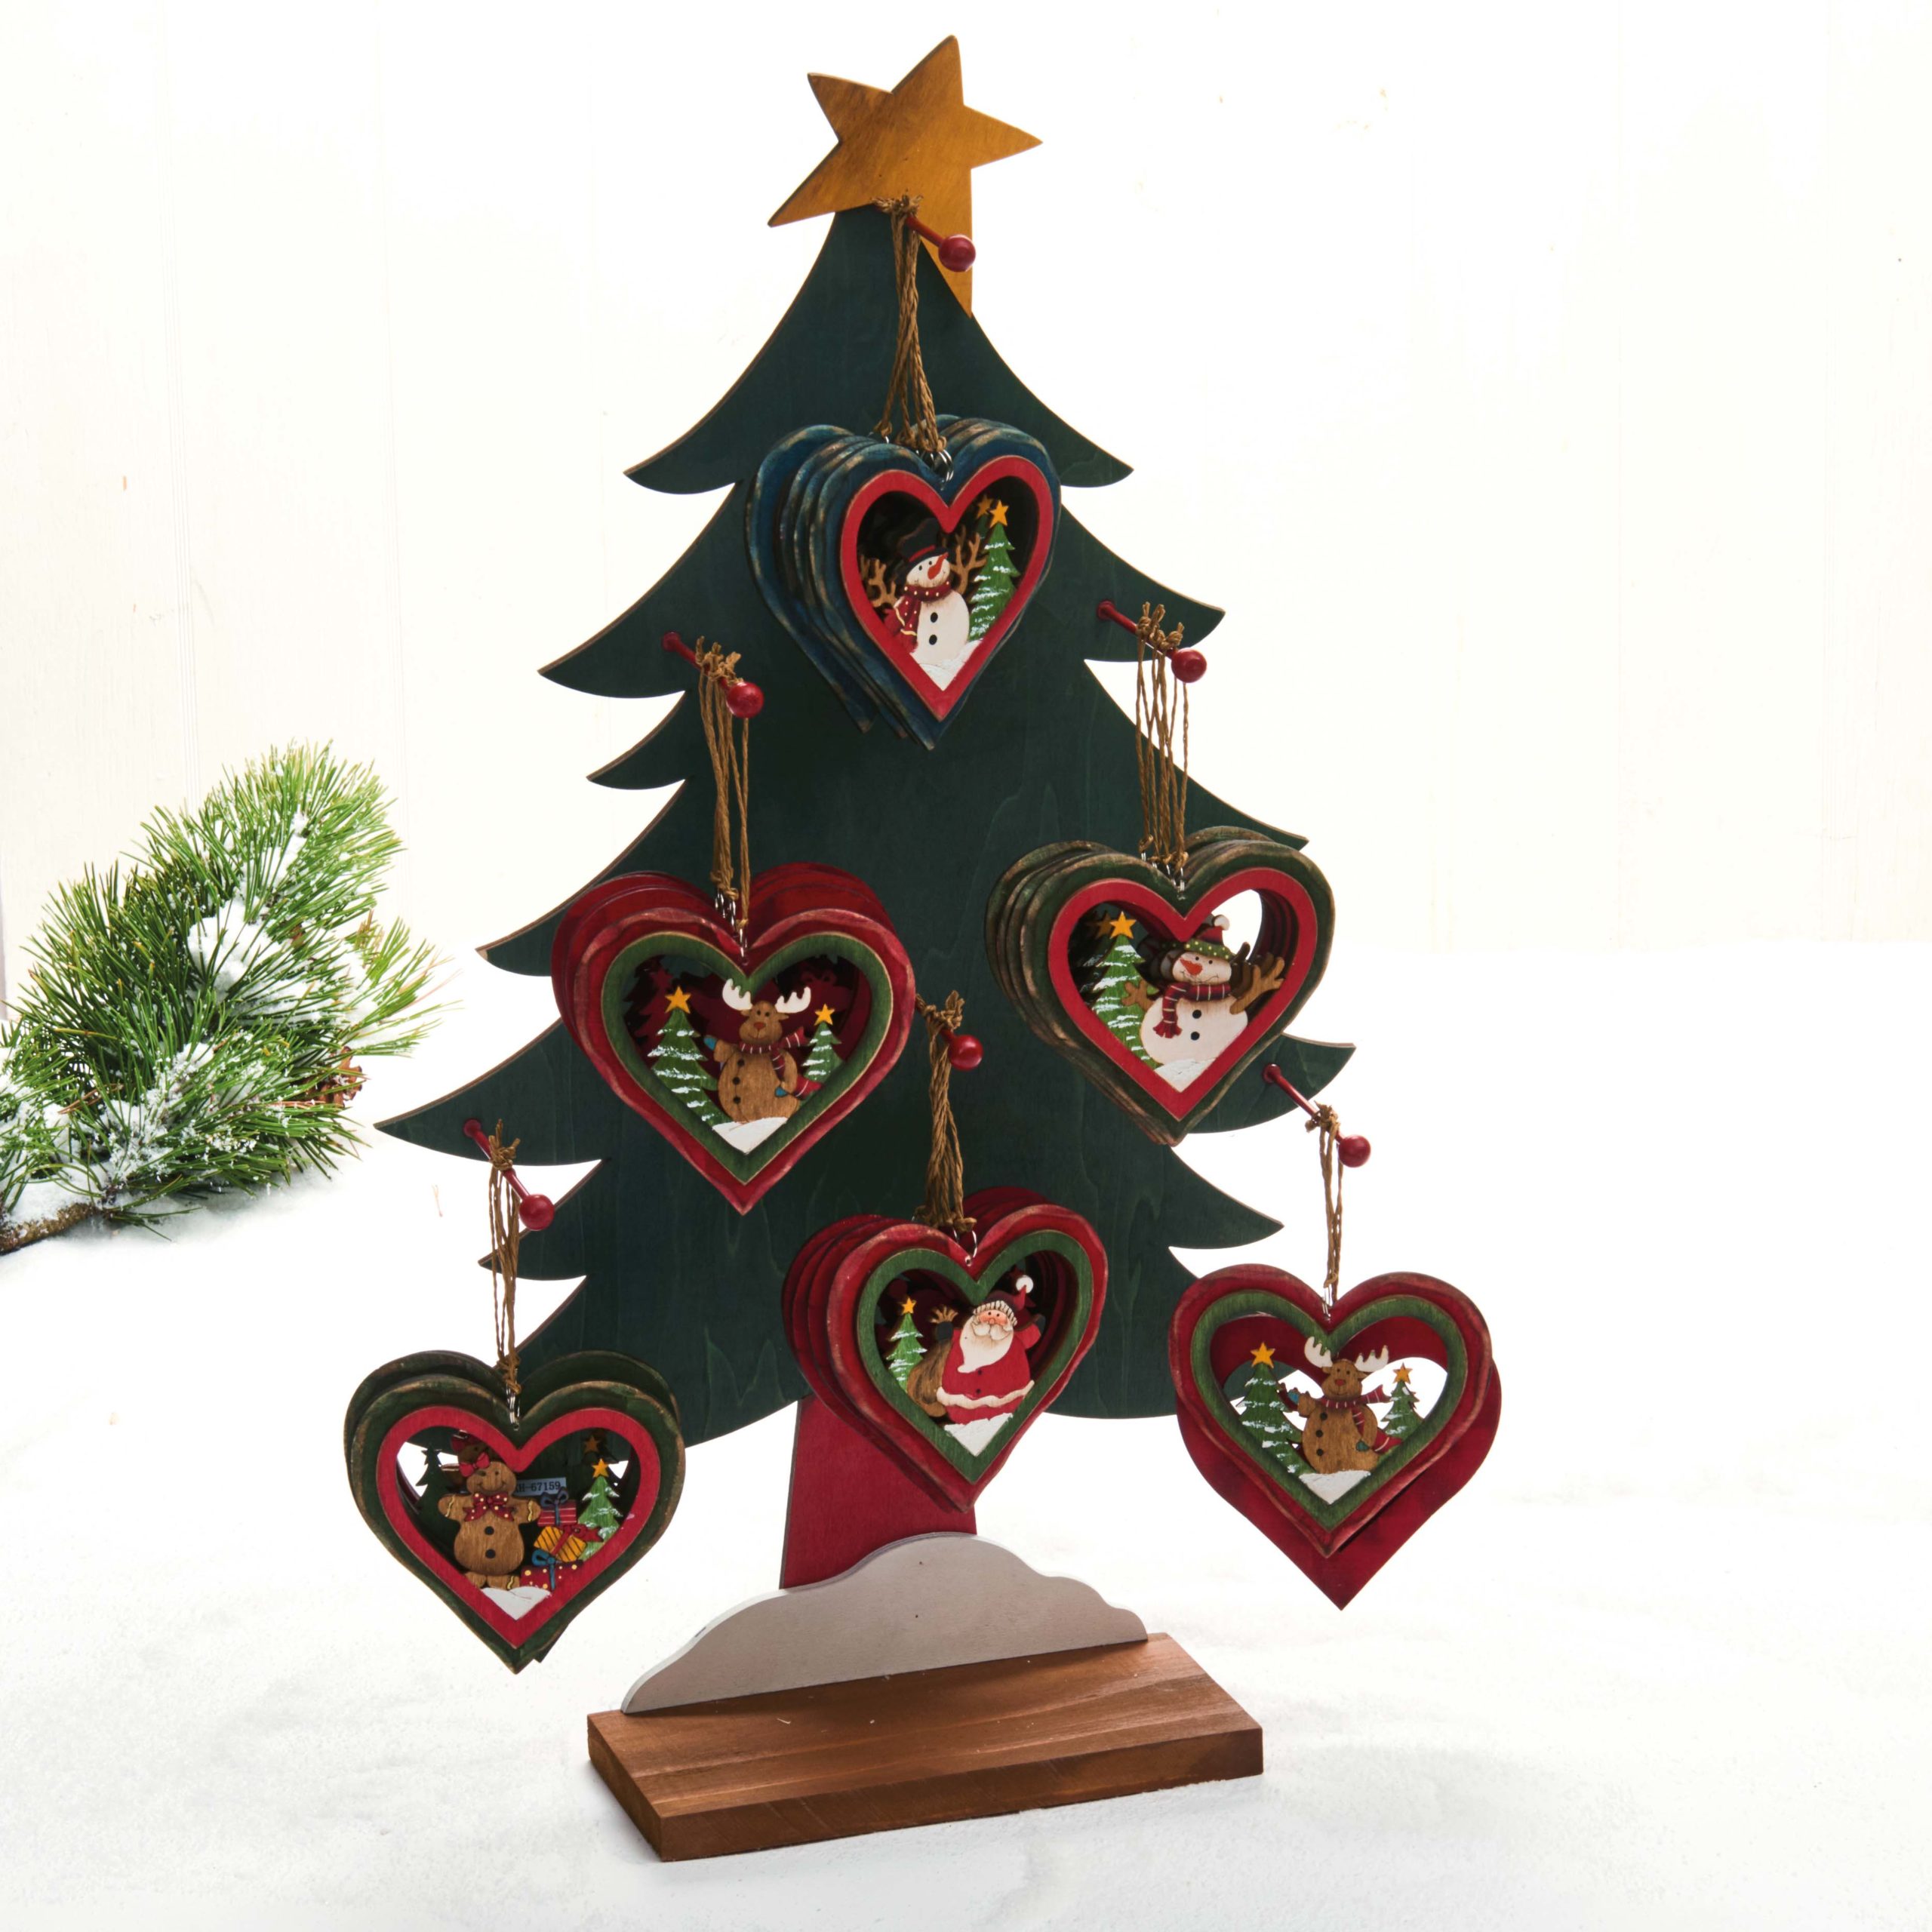 Hjertetræfigur til juletræet – Kagekone